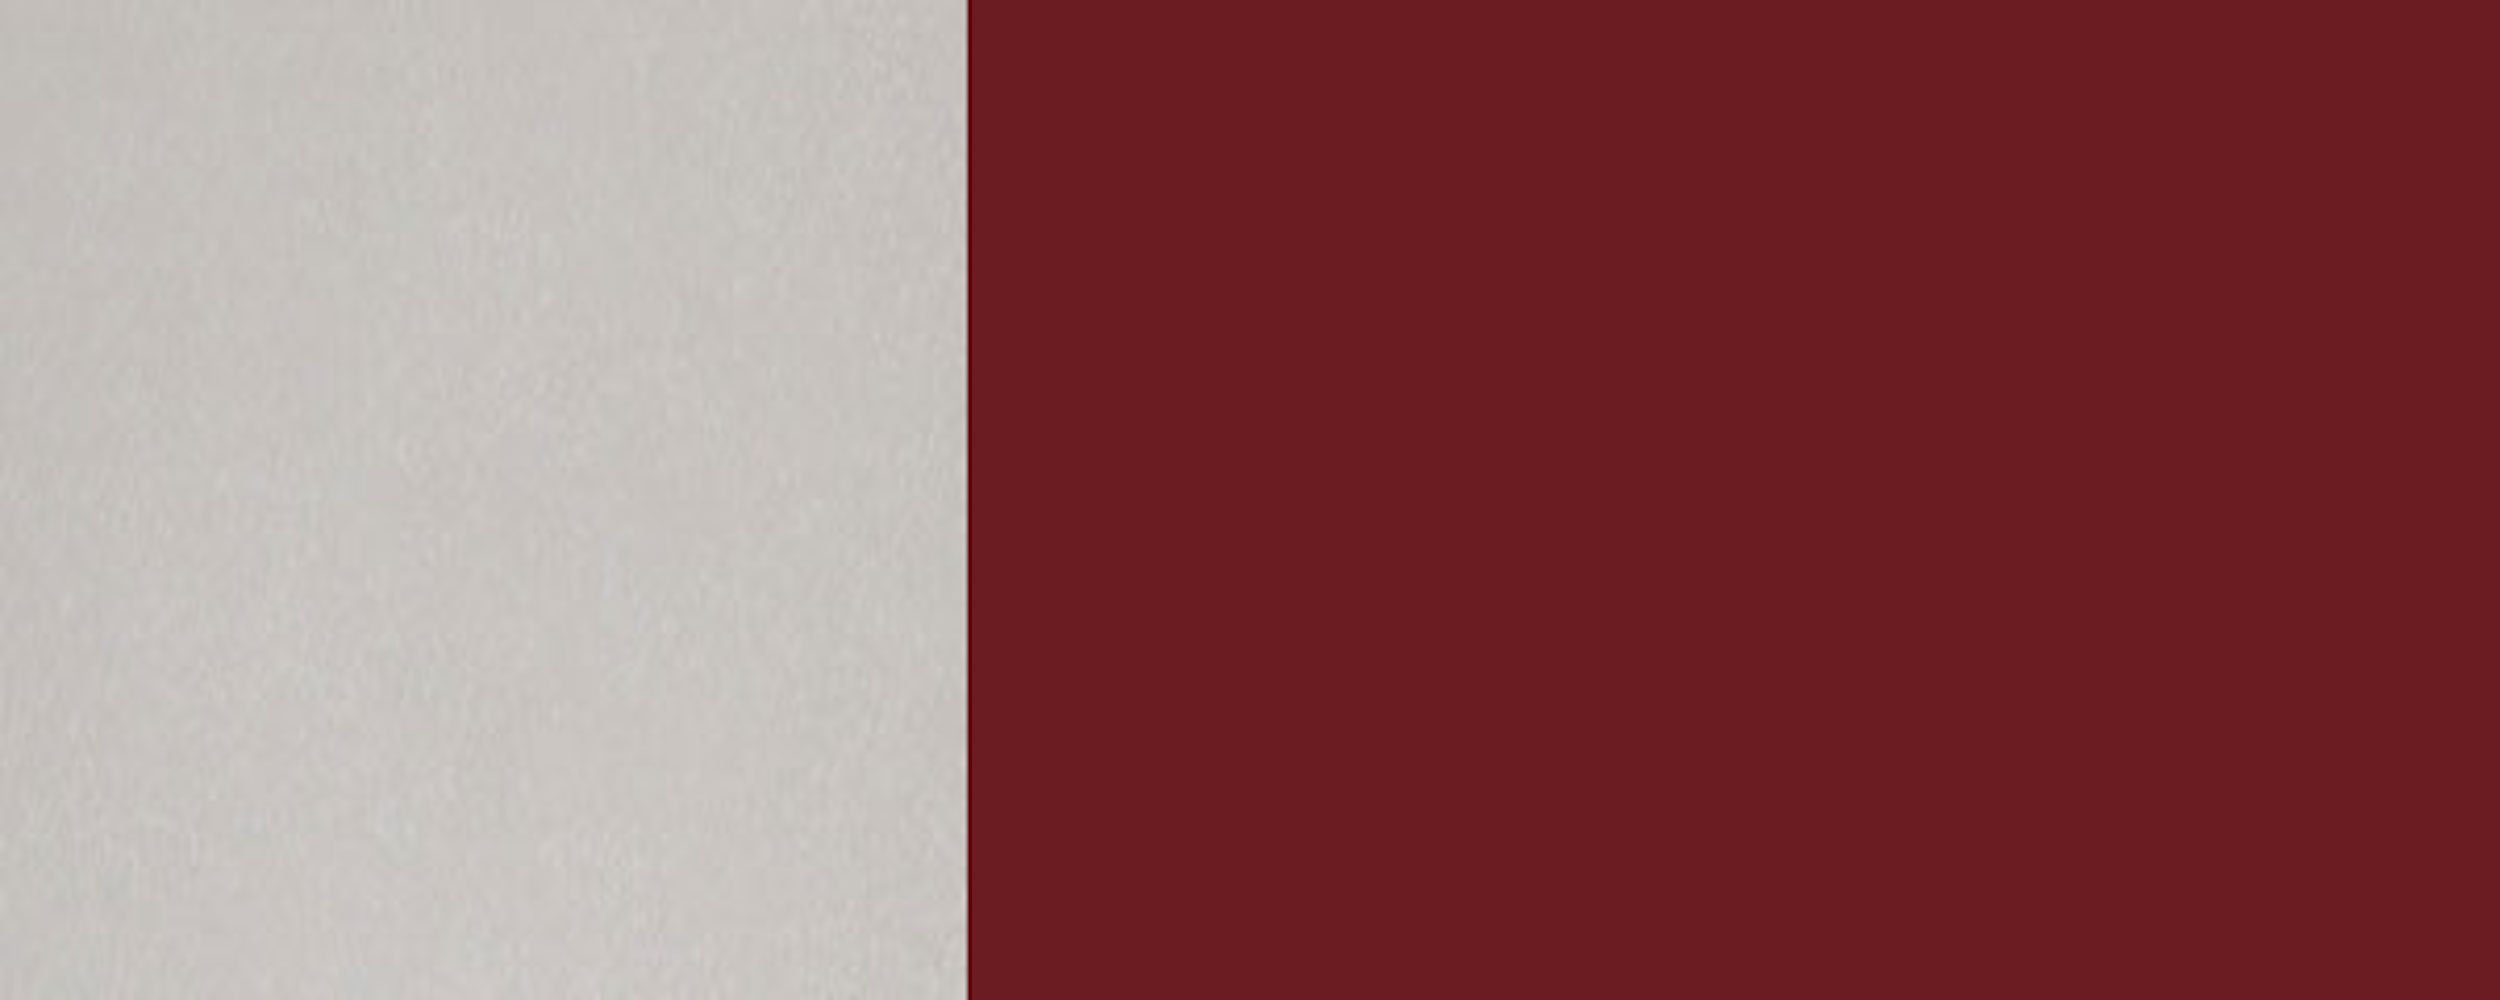 Feldmann-Wohnen Klapphängeschrank Rimini mit matt (Rimini) Glaseinsatz wählbar 3004 und RAL Korpusfarbe 80cm purpurrot Front- 2-türig